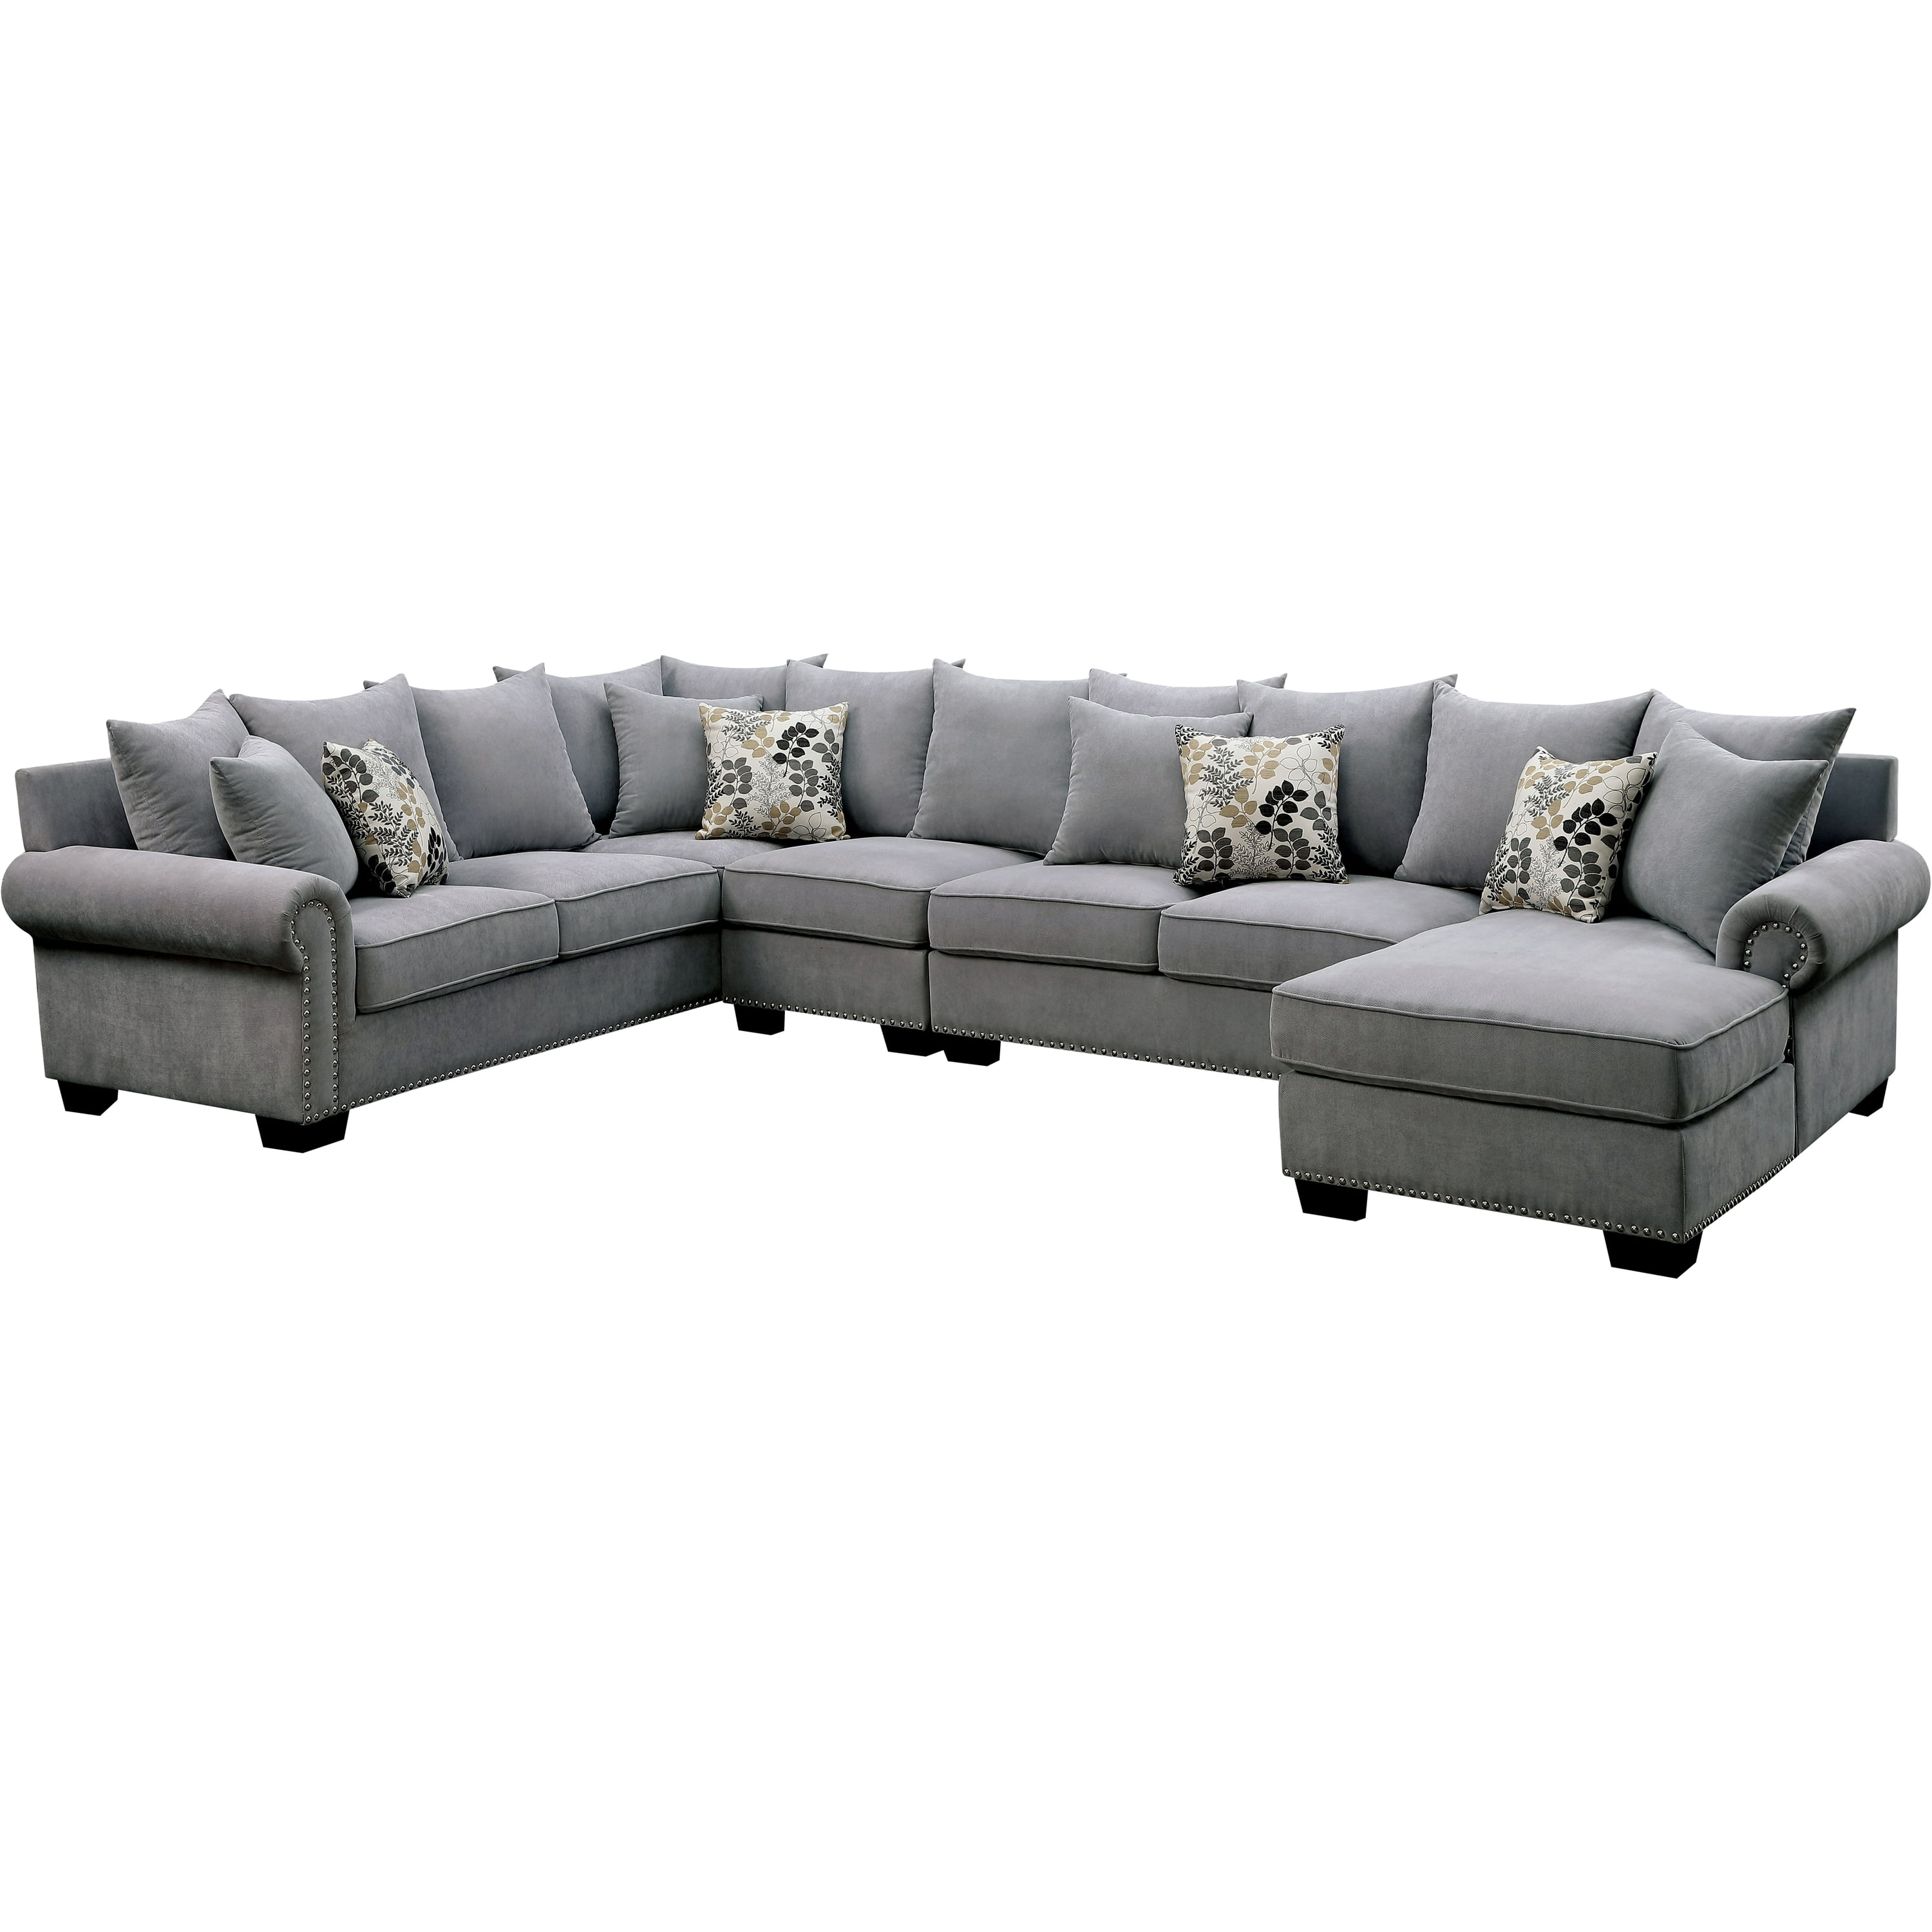 Furniture of America Rochelle Contemporary Nailhead Trim Sectional Sofa